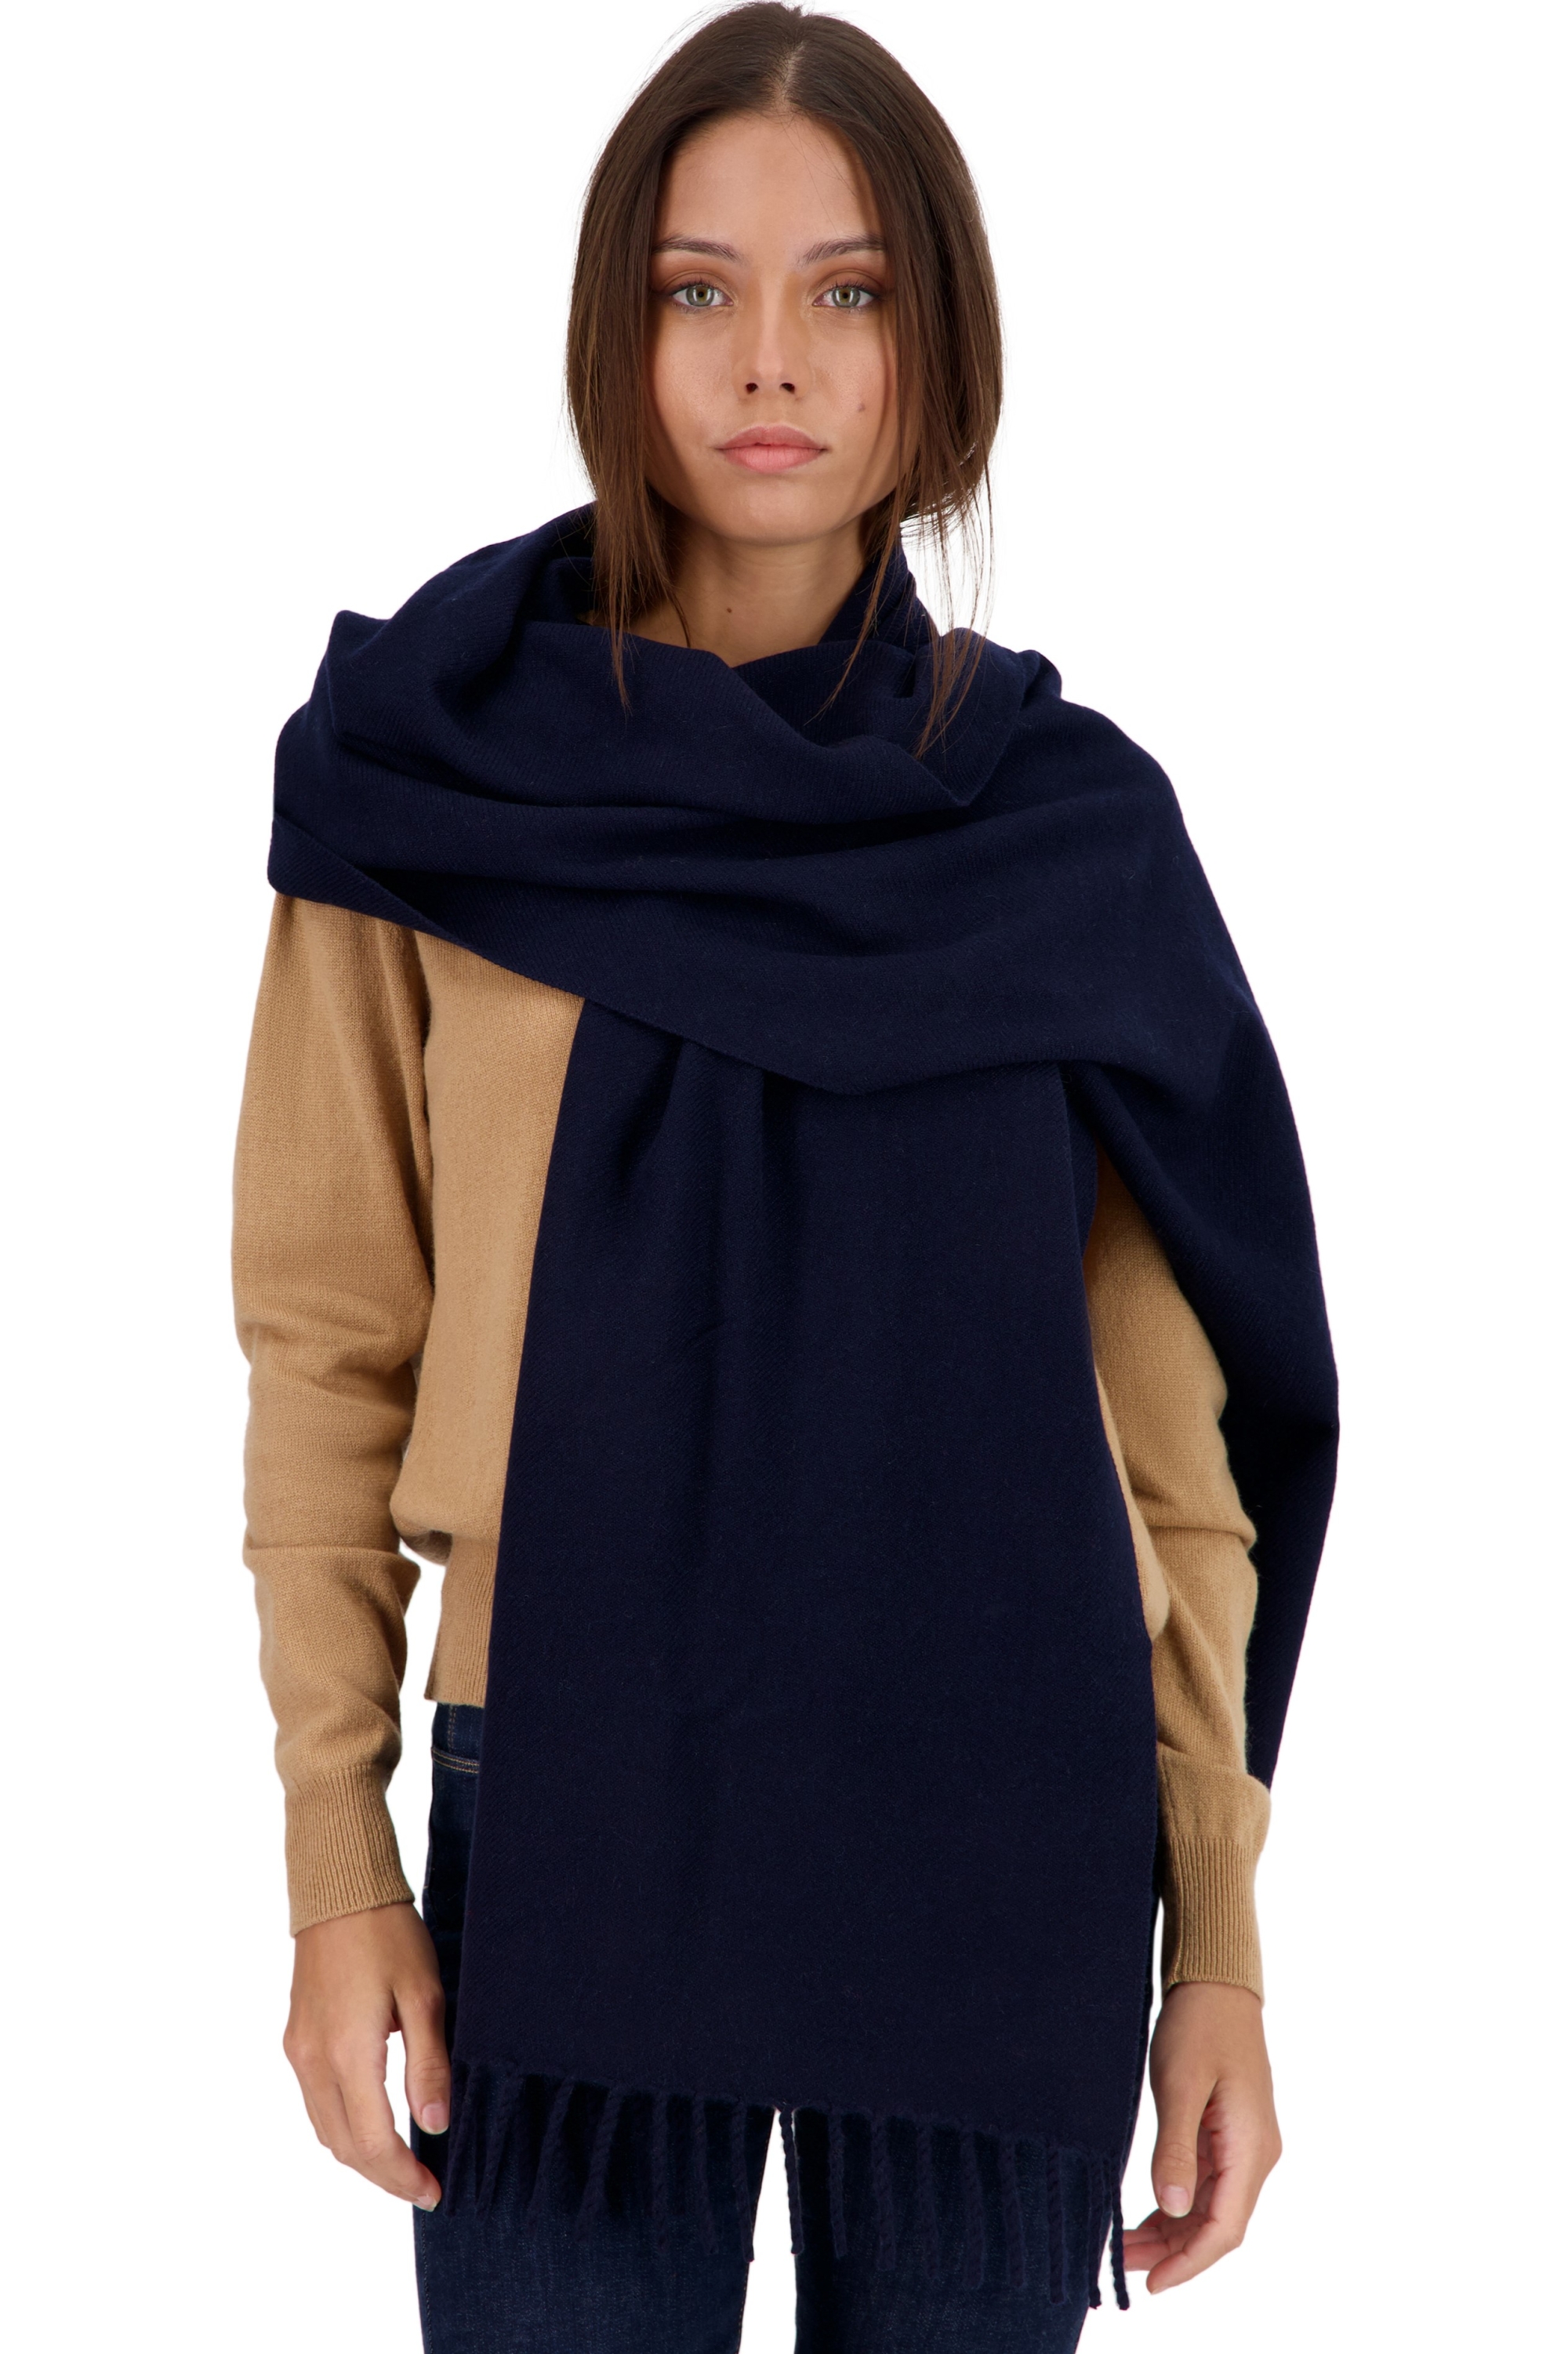 Cashmere accessories scarf mufflers tartempion dress blue 210 x 45 cm